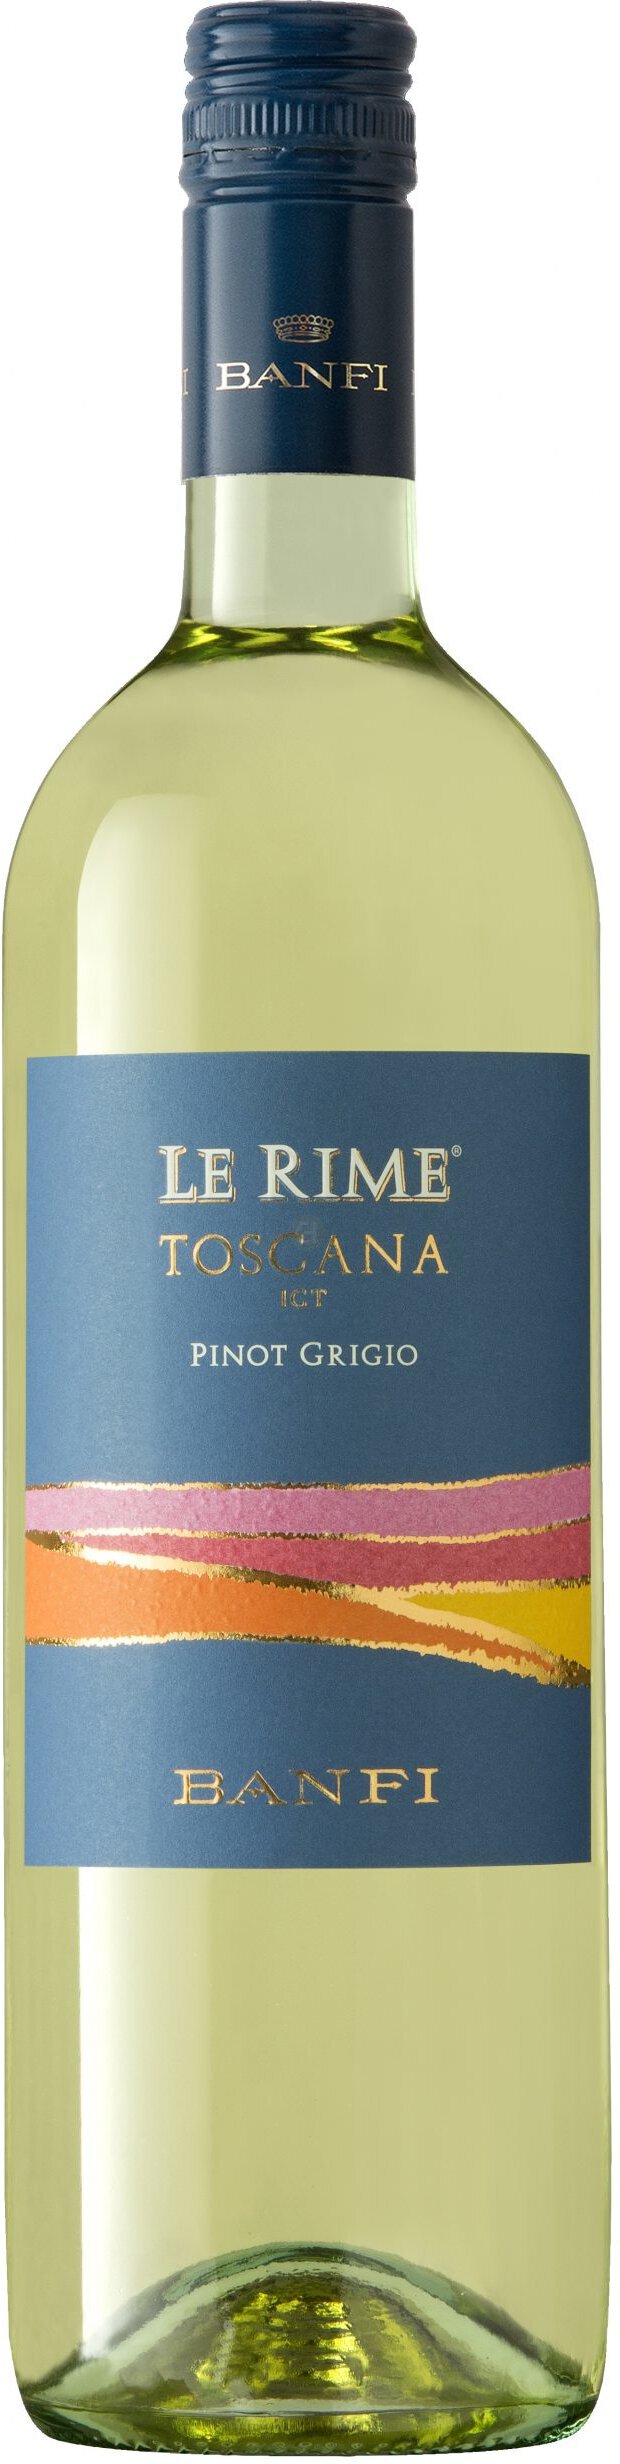 Banfi Tuscany Le Rime Pinot Grigio